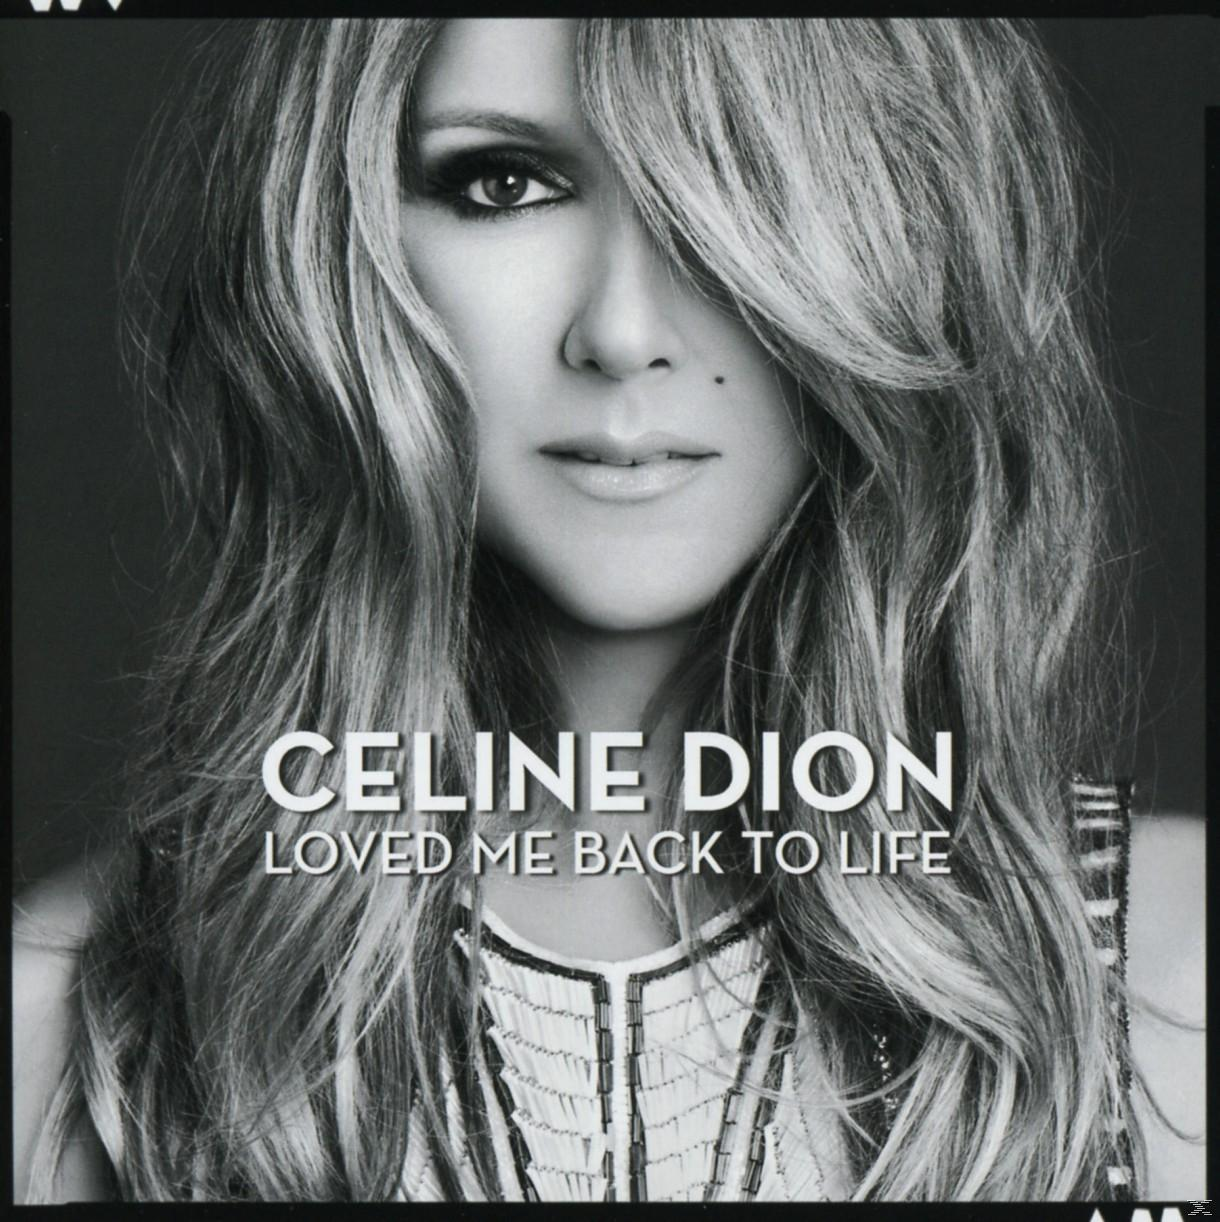 Céline Dion - (CD) - Back Loved To Me Life